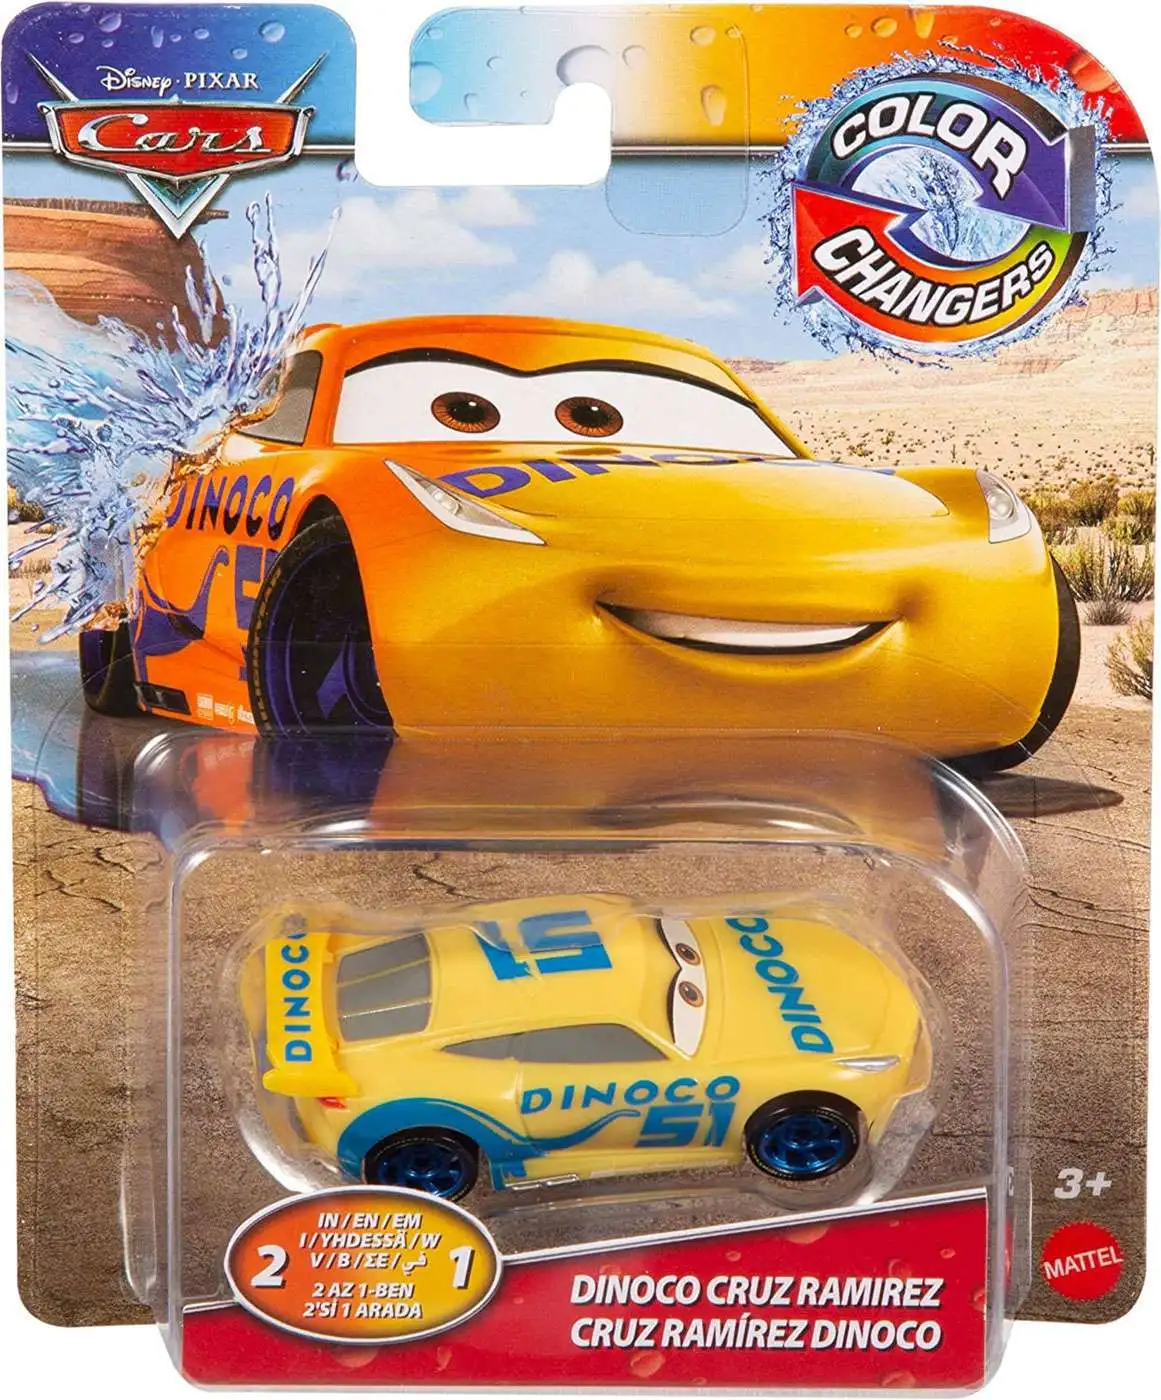 Disney Pixar Cars 2020 Color Changers Dinoco Cruz Ramirez 